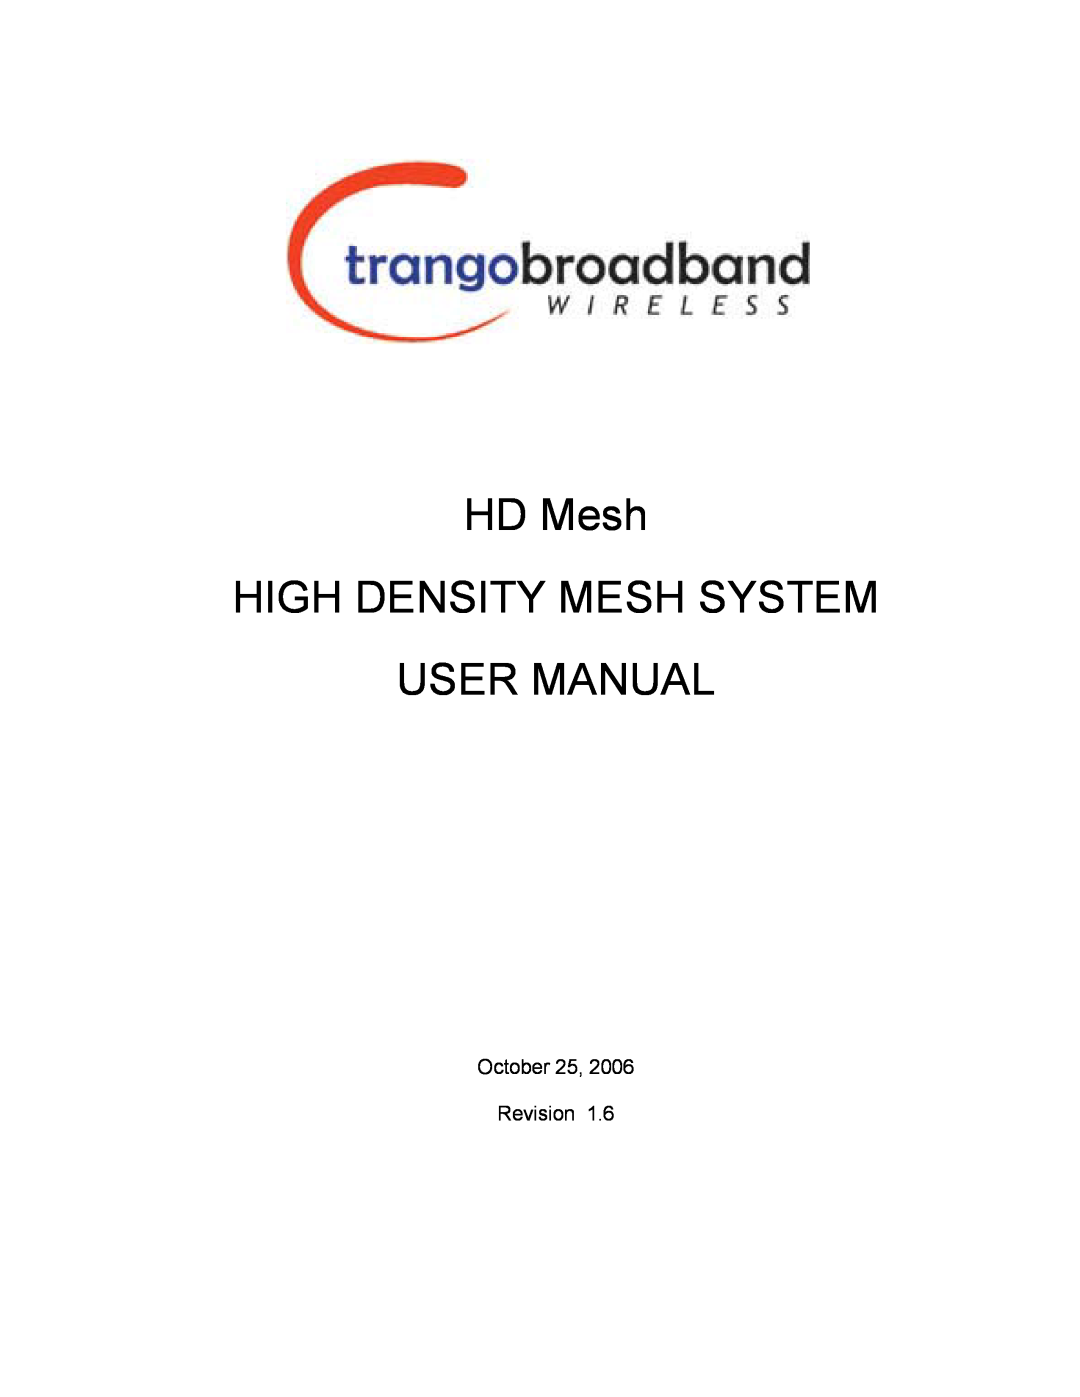 Trango Broadband High Density Mesh System user manual Ffirm HD Mesh HIGH DENSITY MESH SYSTEM USER MANUAL 